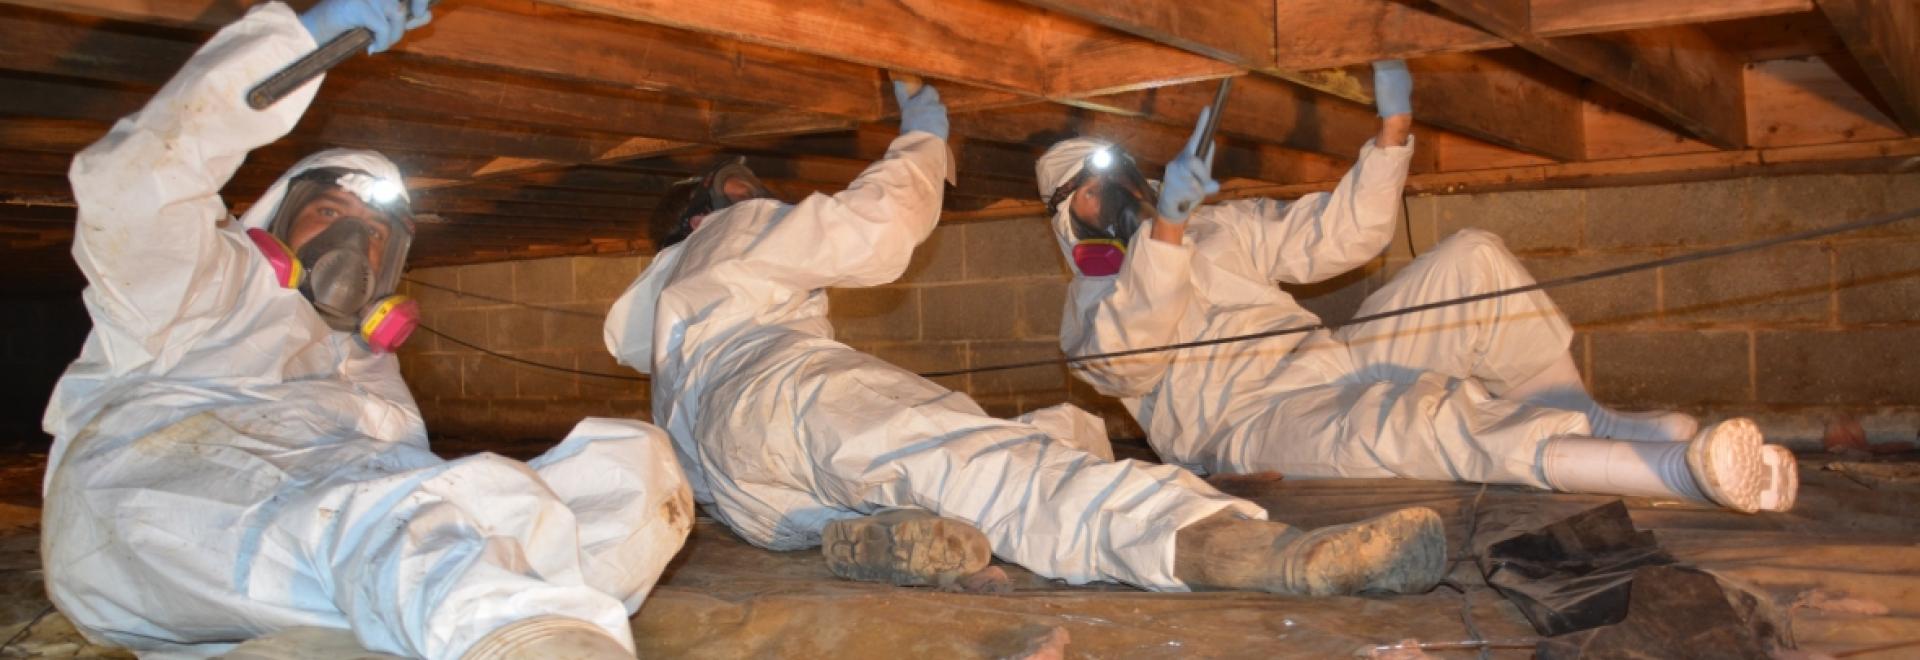 Technicians installing insulation in crawlspace under home